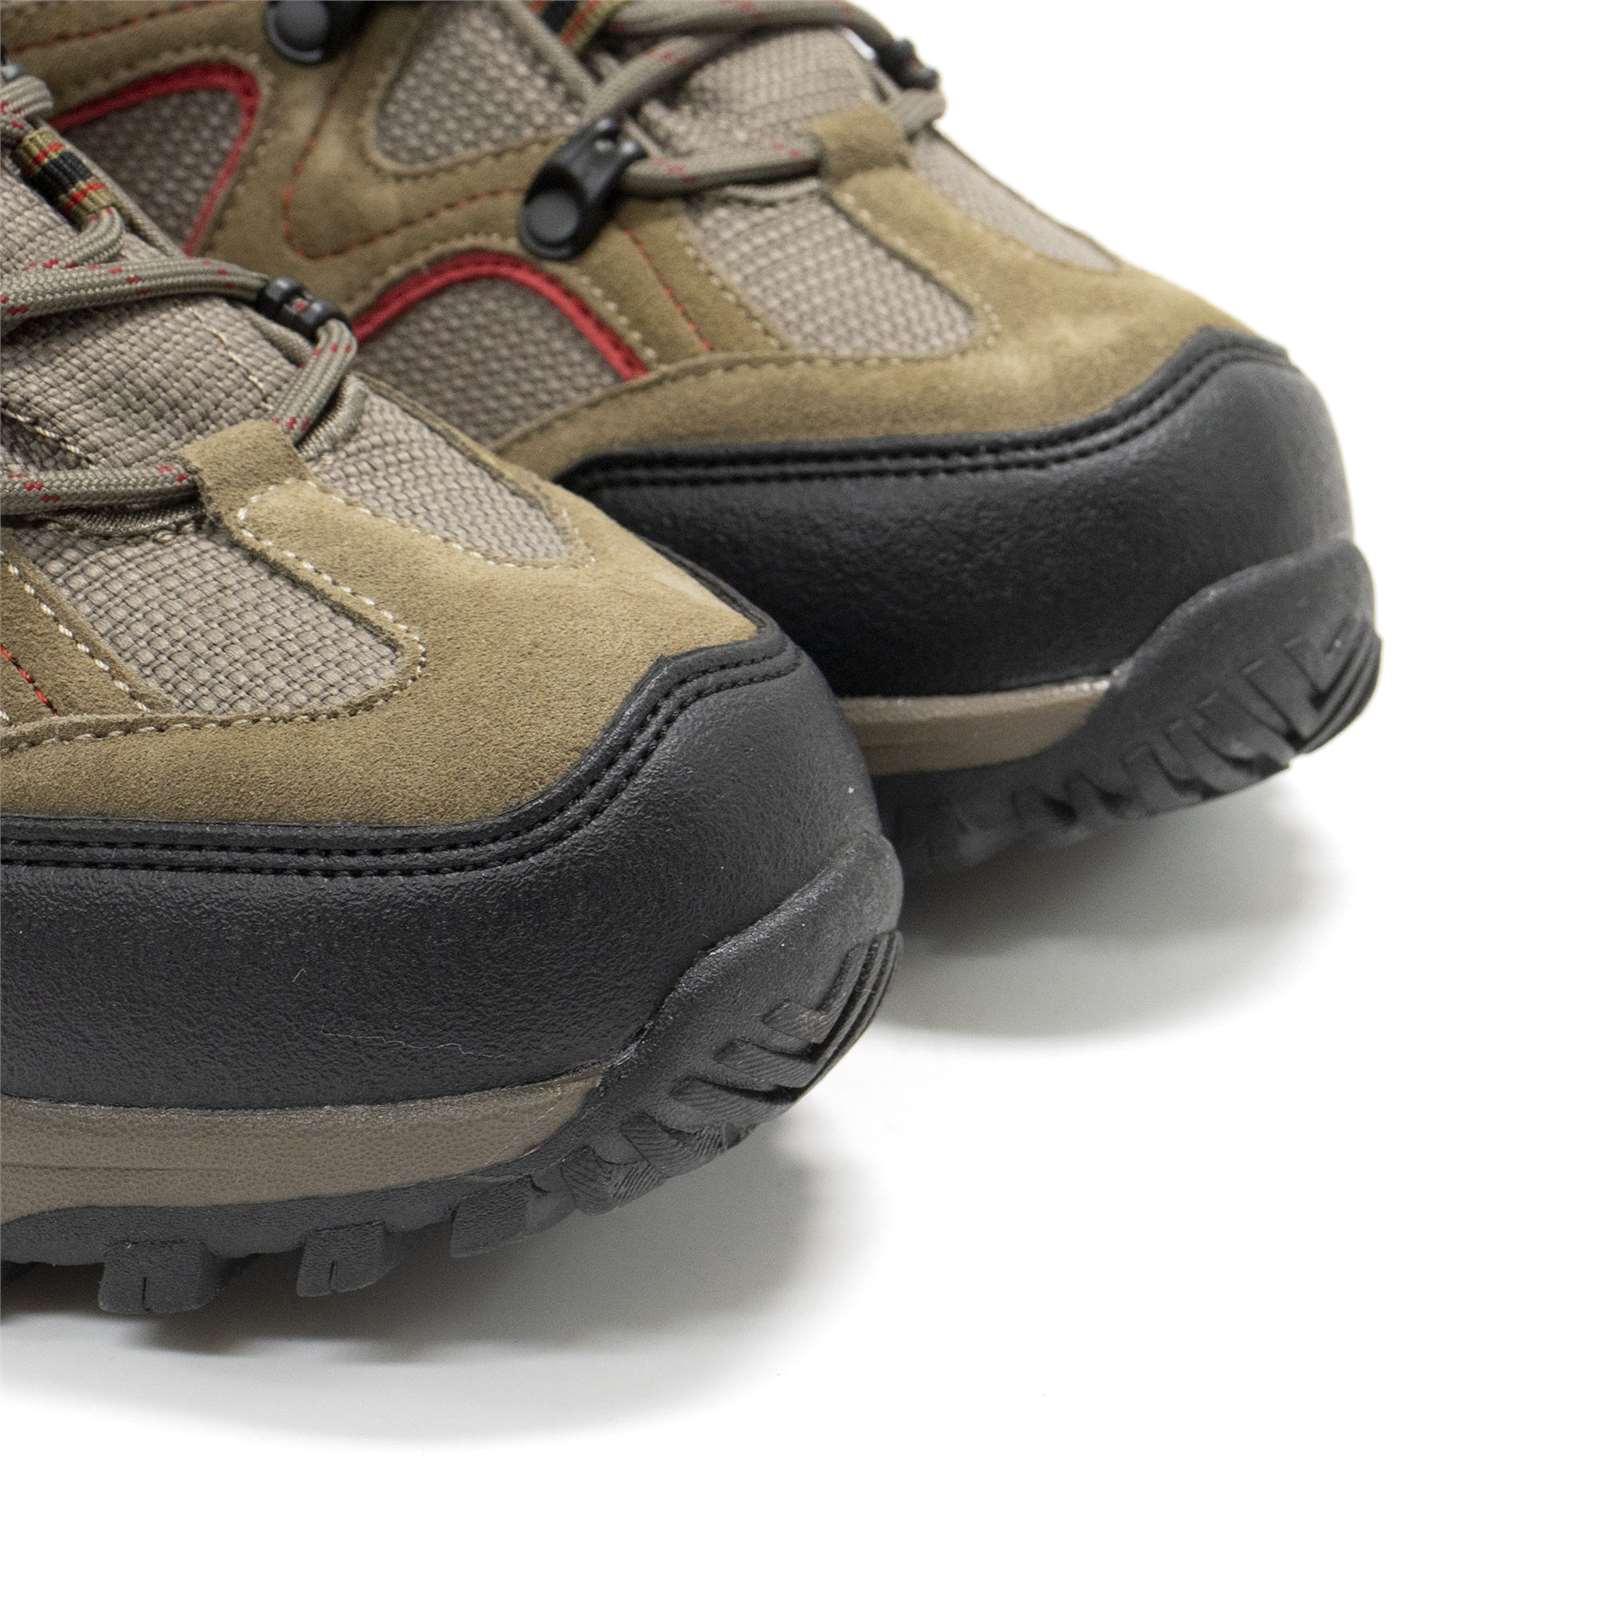 Northside Men Snohomish Low Waterproof Hiking Shoes